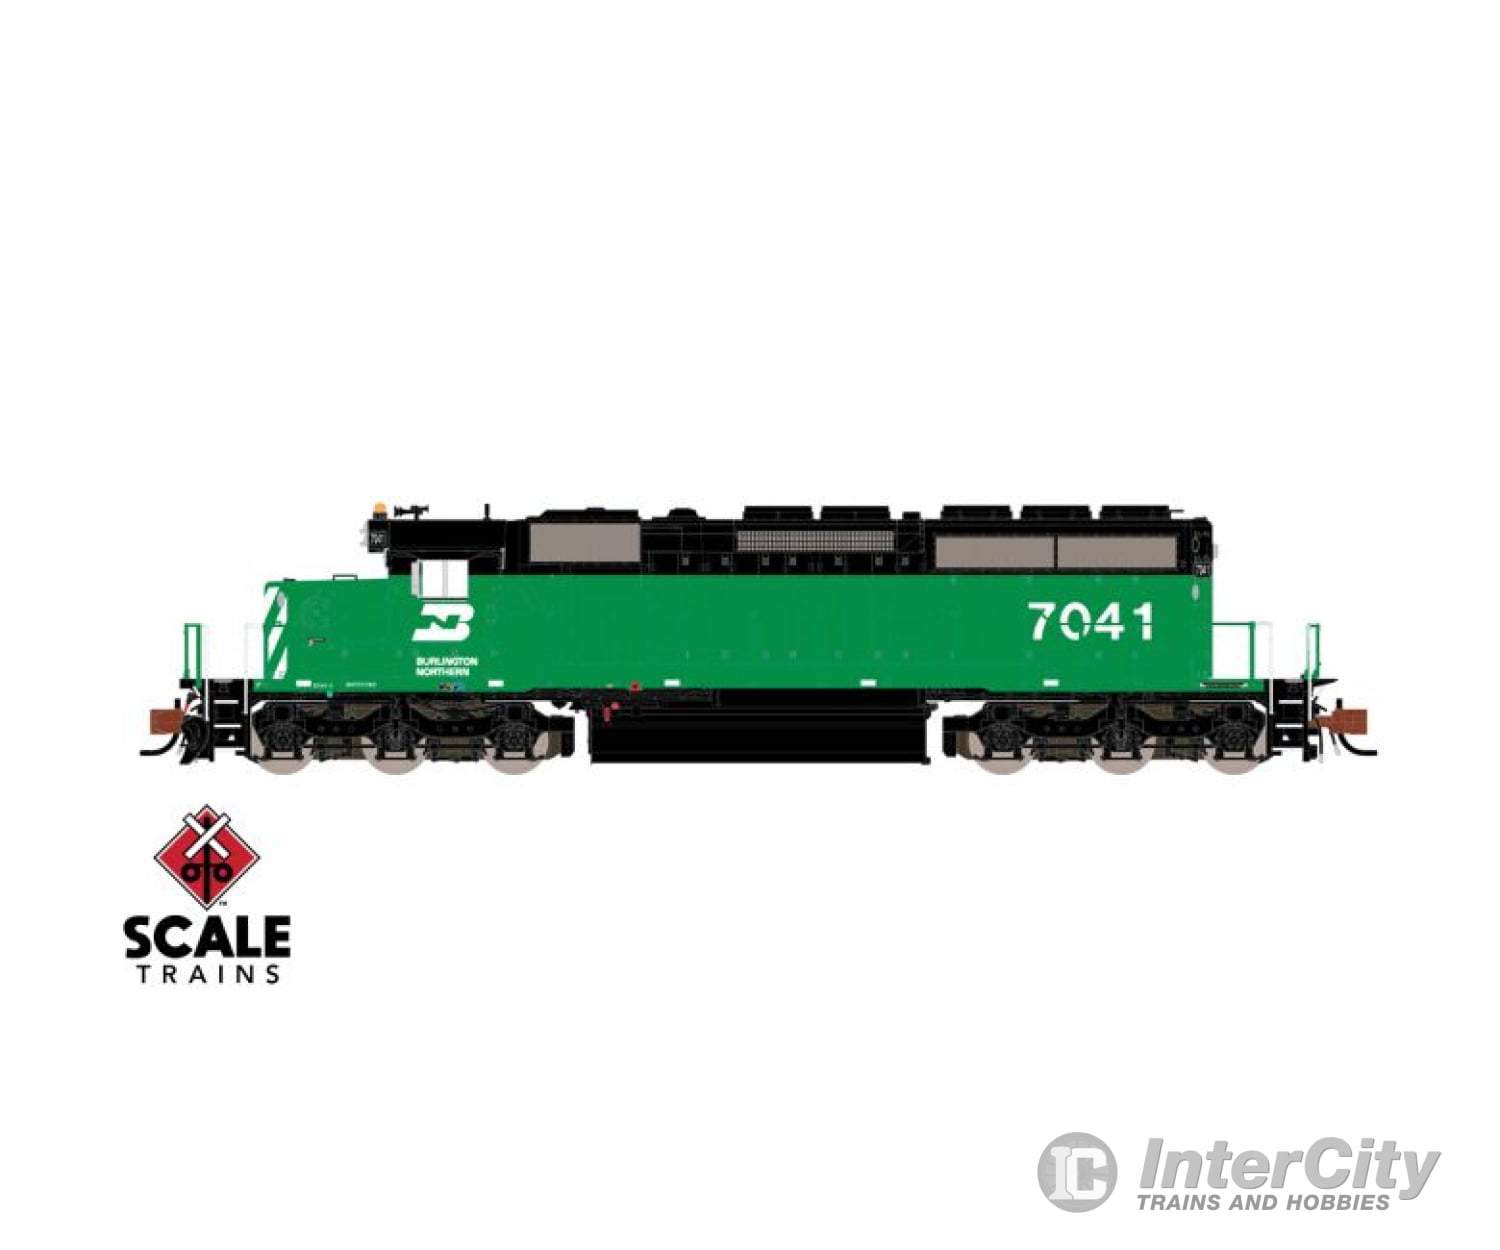 Scale Trains Sxt33783 Rivet Counter N Emd Sd40-2 Bn Burlington Northern #7035 Dcc/Sound Locomotives